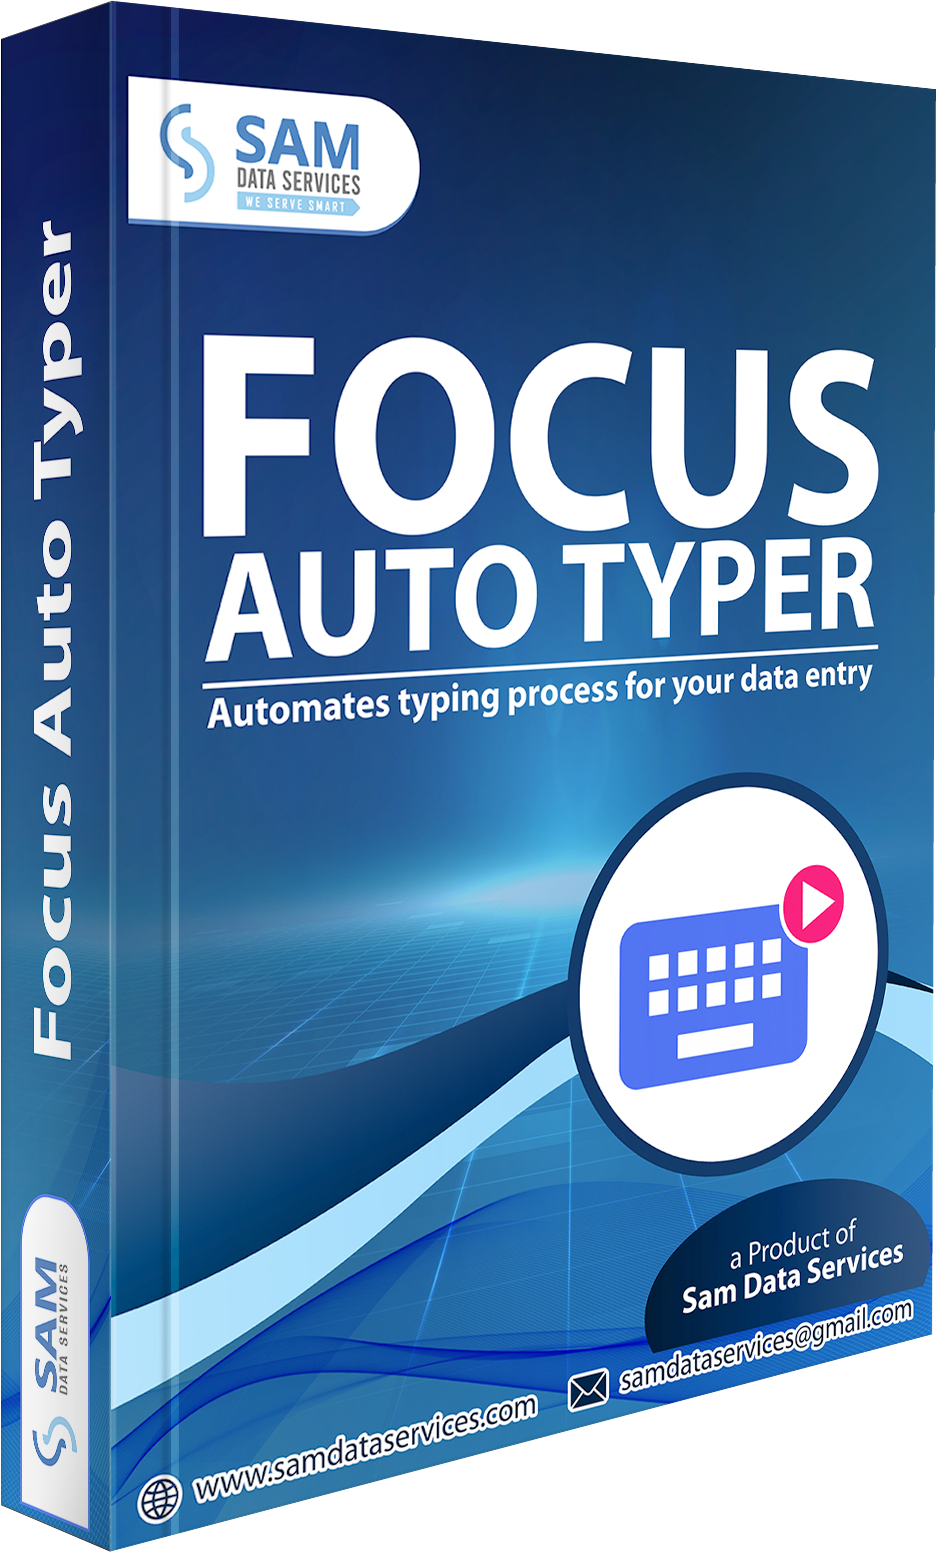 Focus Auto Typer software